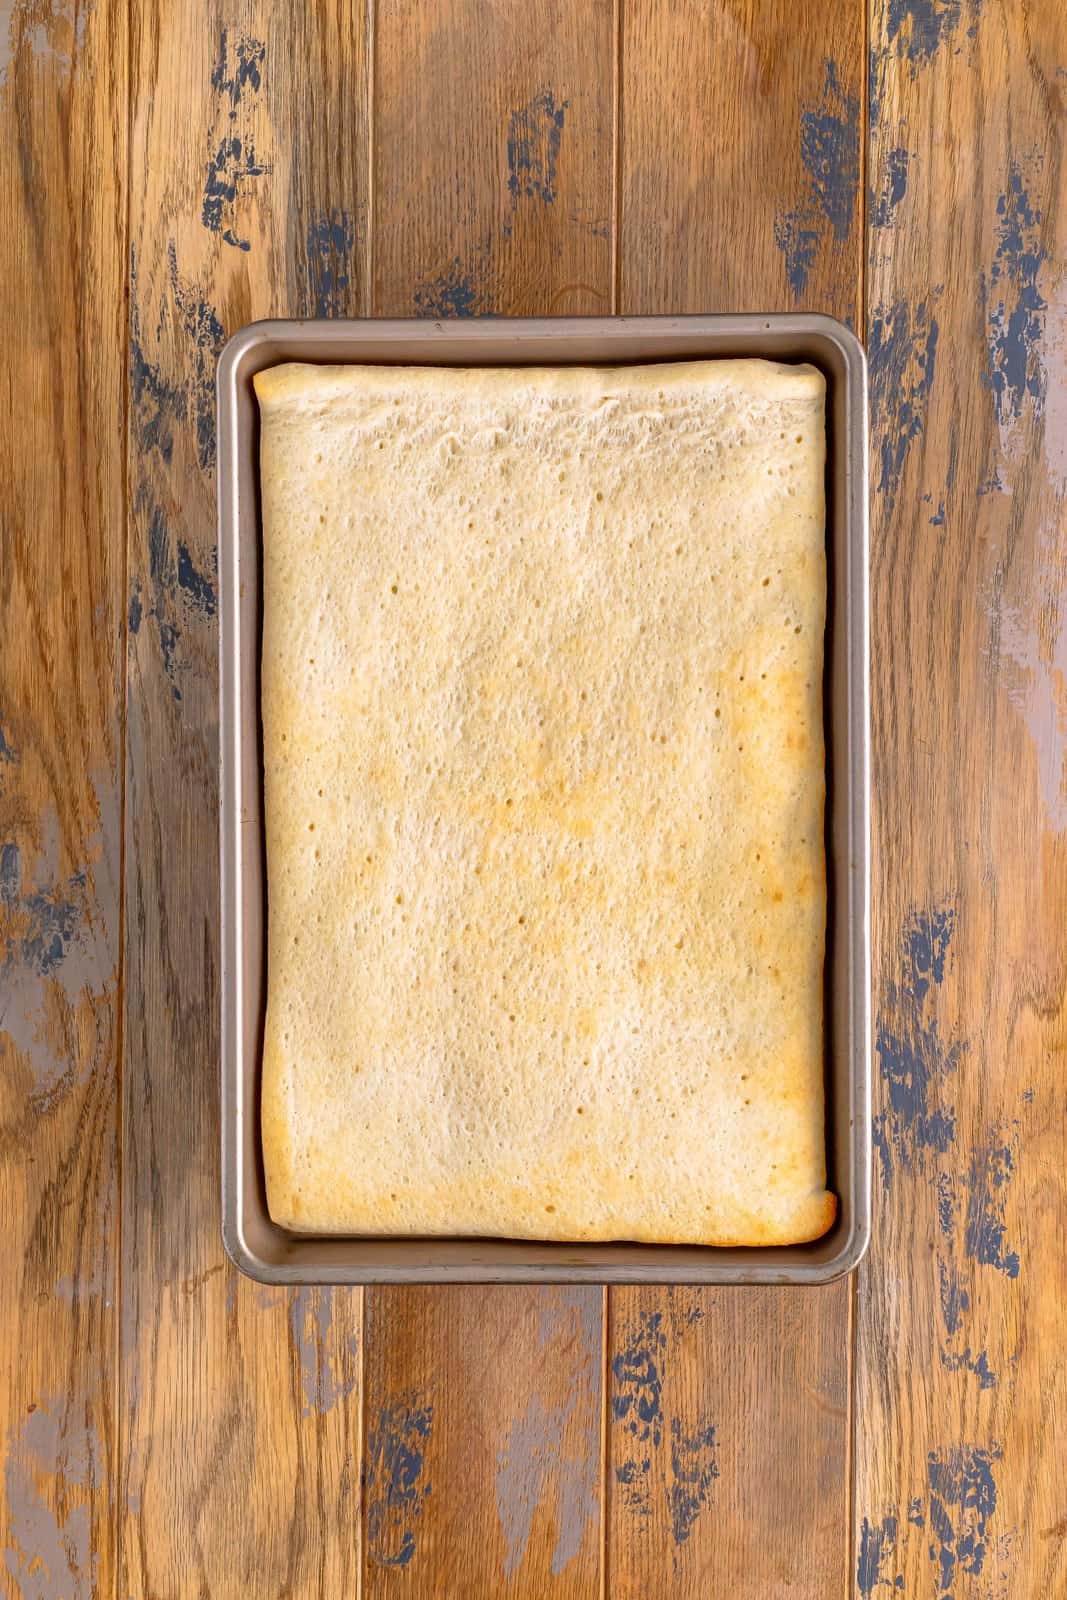 pre baked pizza dough in a rectangle baking pan.